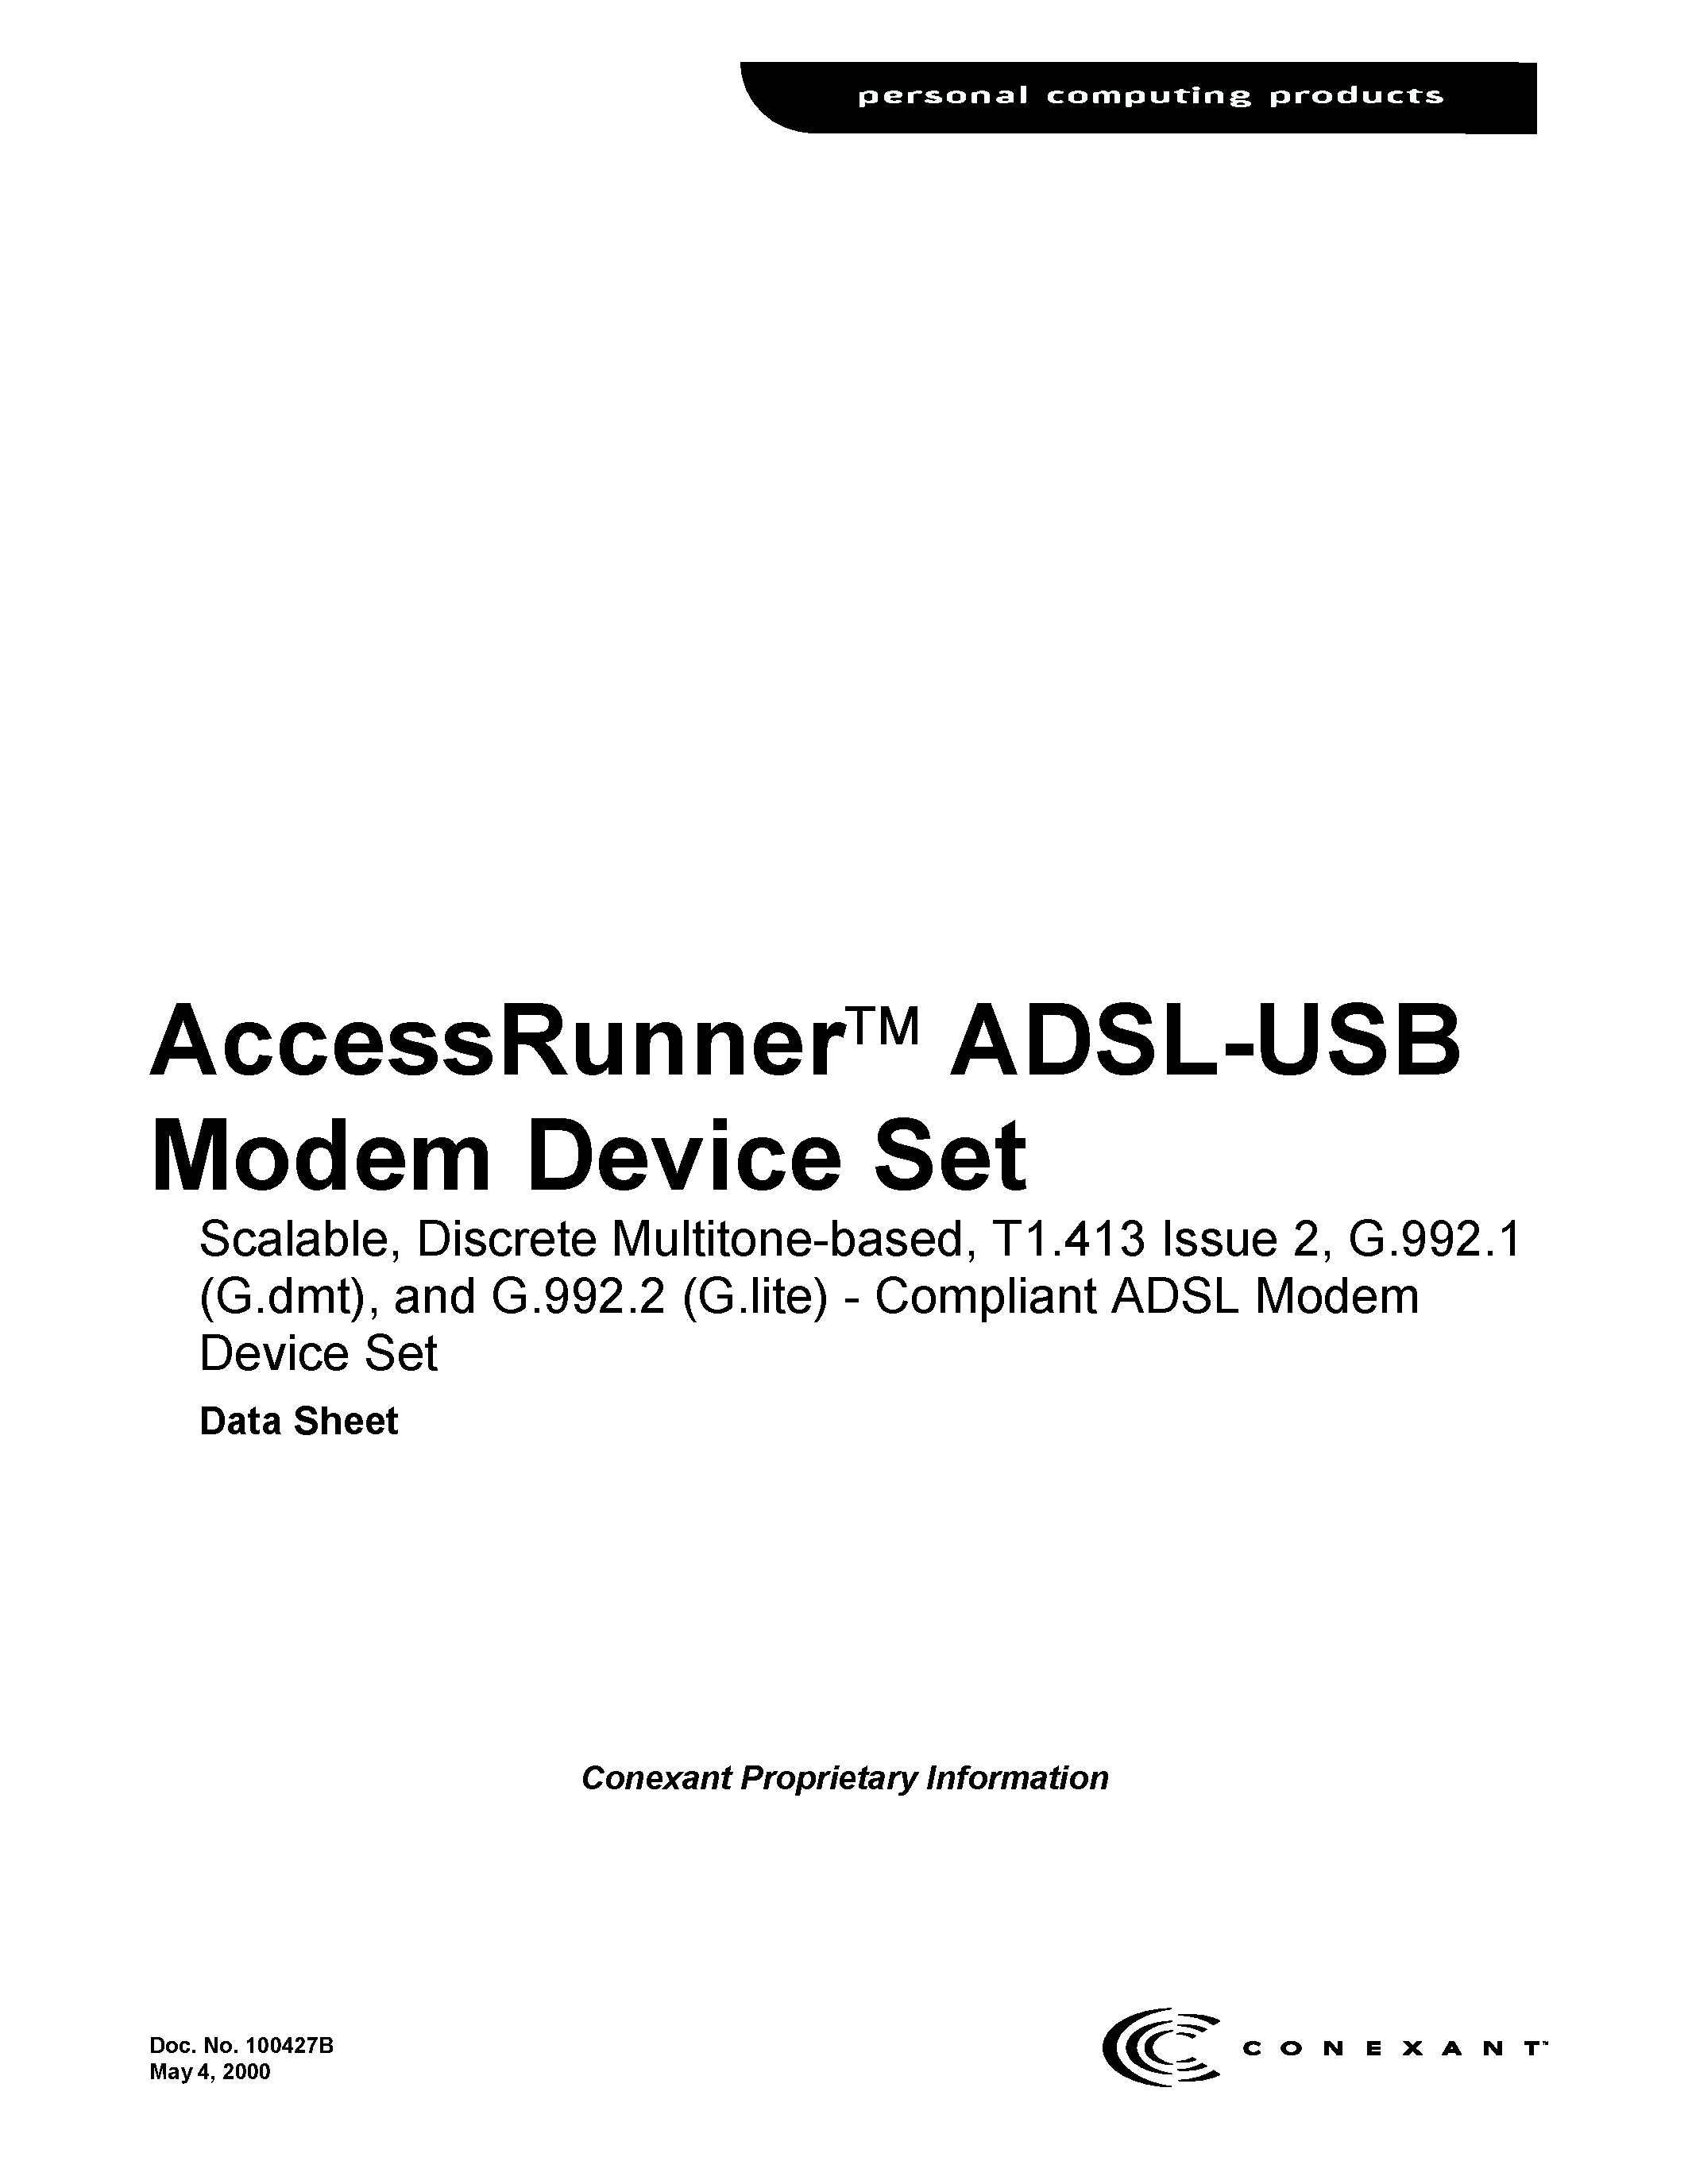 Datasheet CX11627 - AccessRunner ADSL-USB Modem Device Set page 1